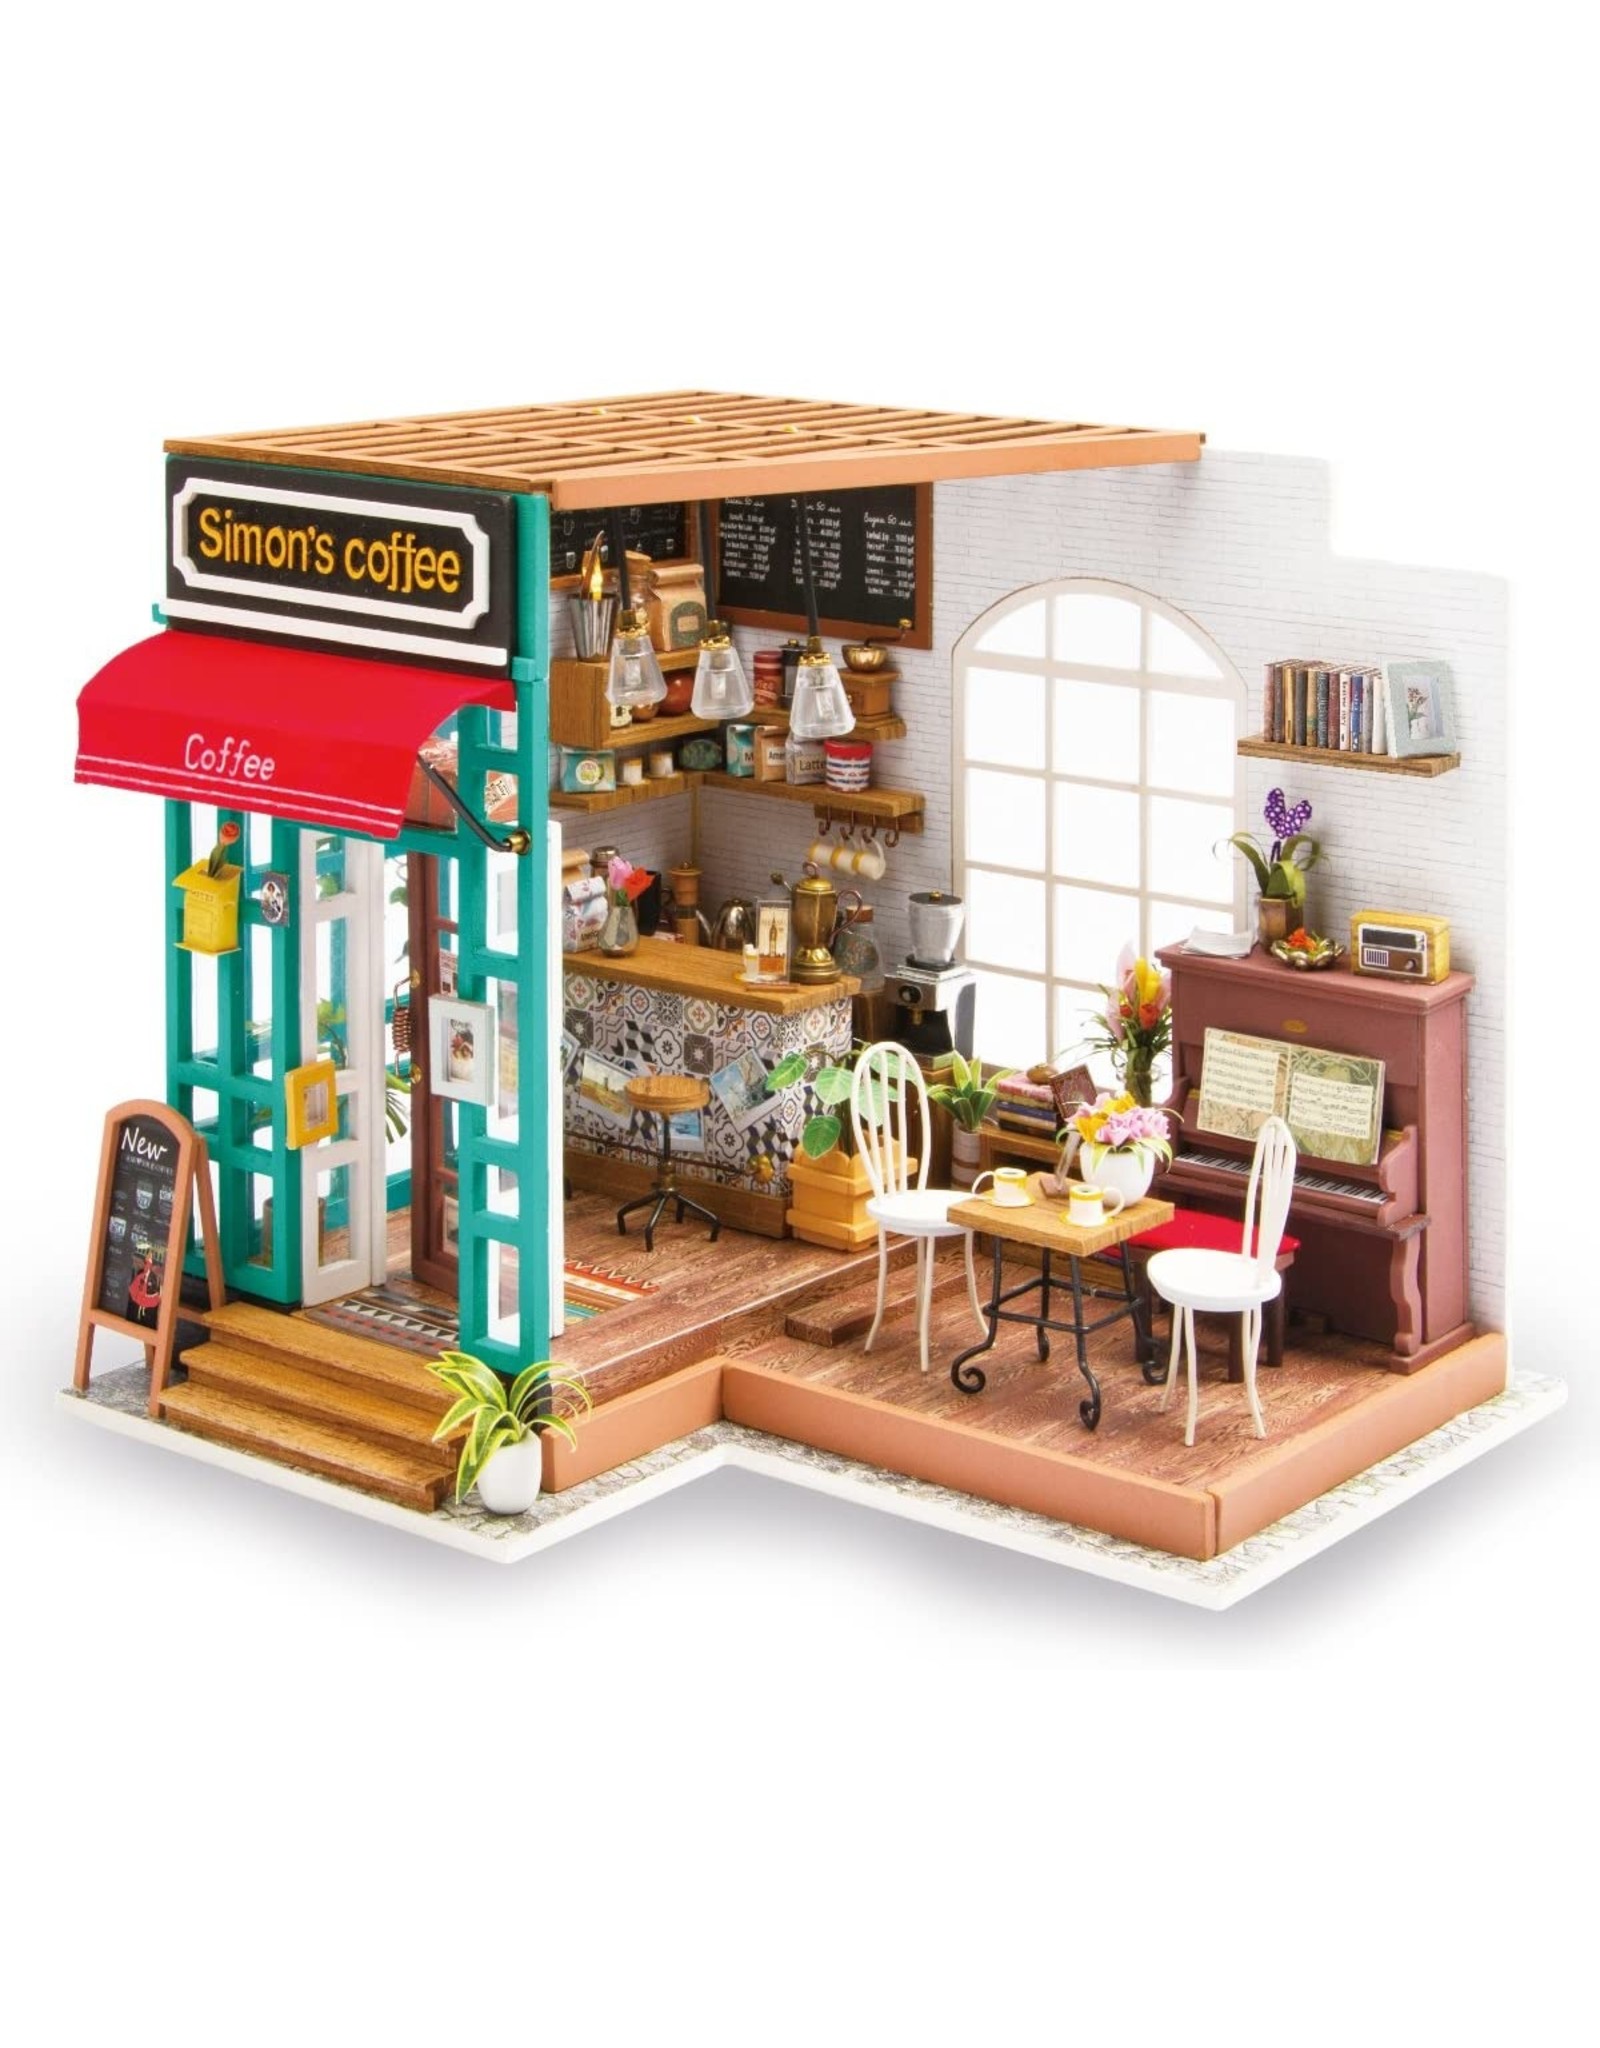 Hands Craft - Simon's Coffee DIY Miniature - Hub Hobby